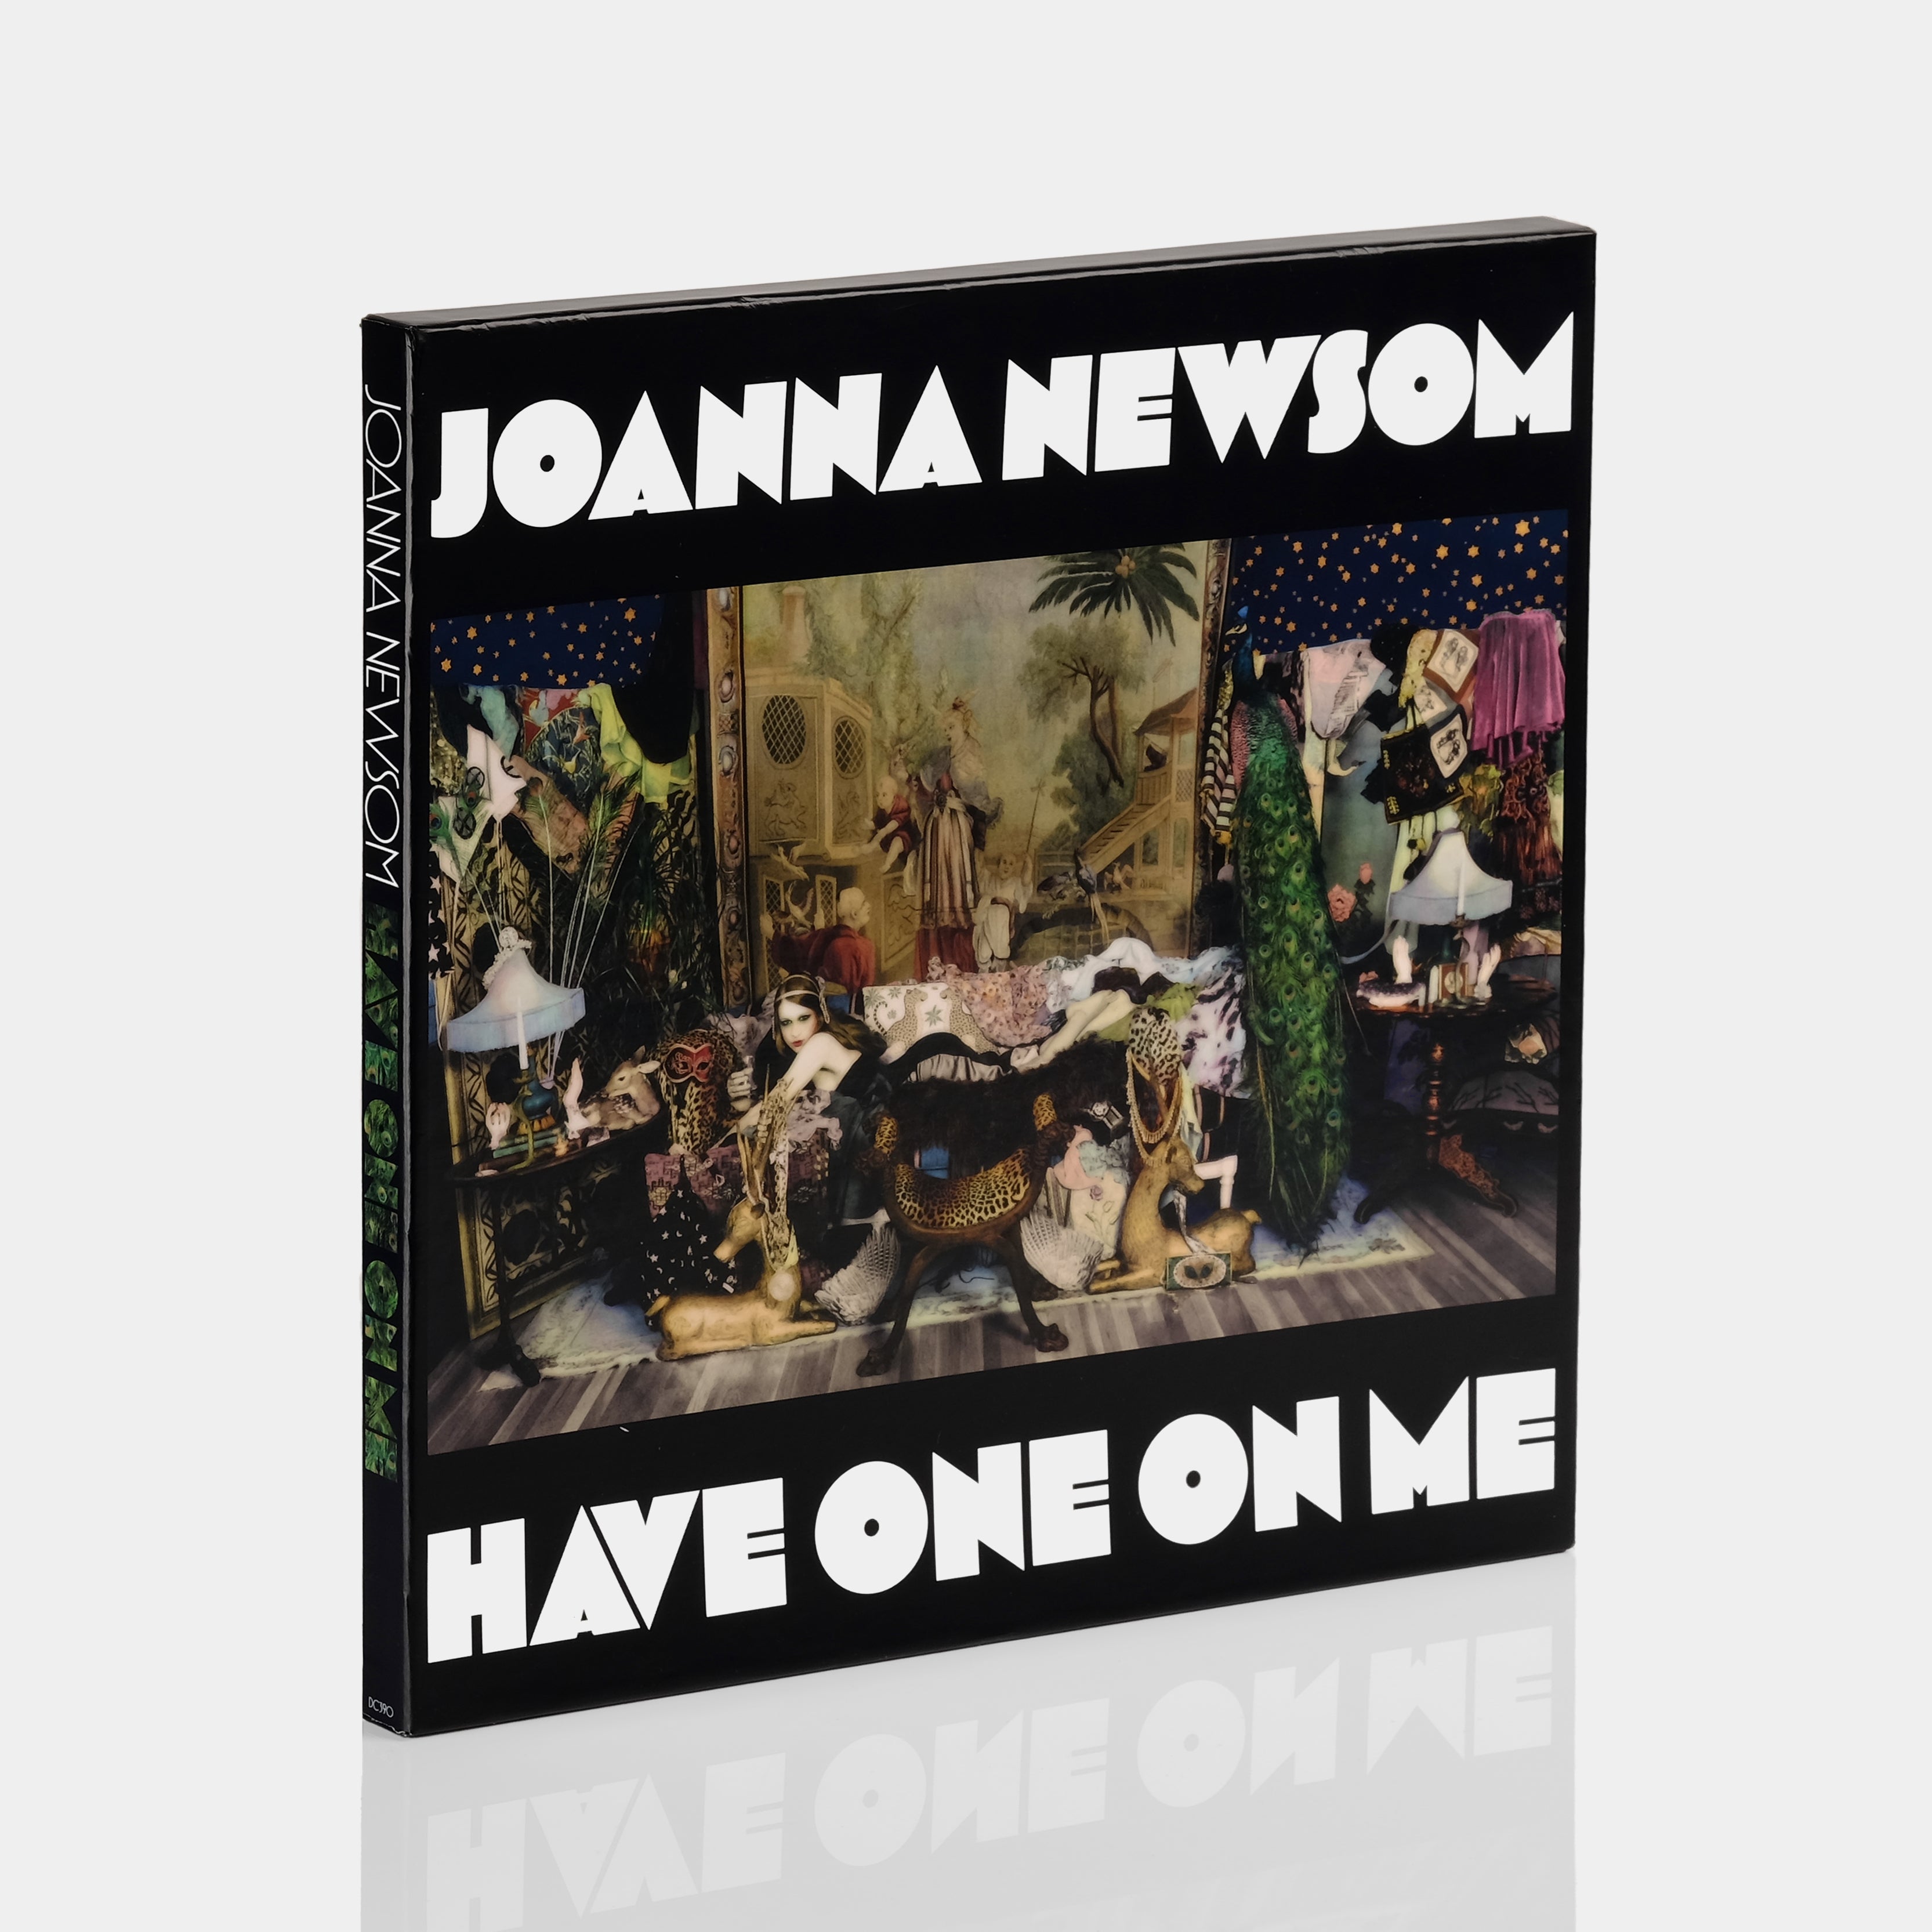 Joanna Newsom - Have One On Me 3xLP Vinyl Record